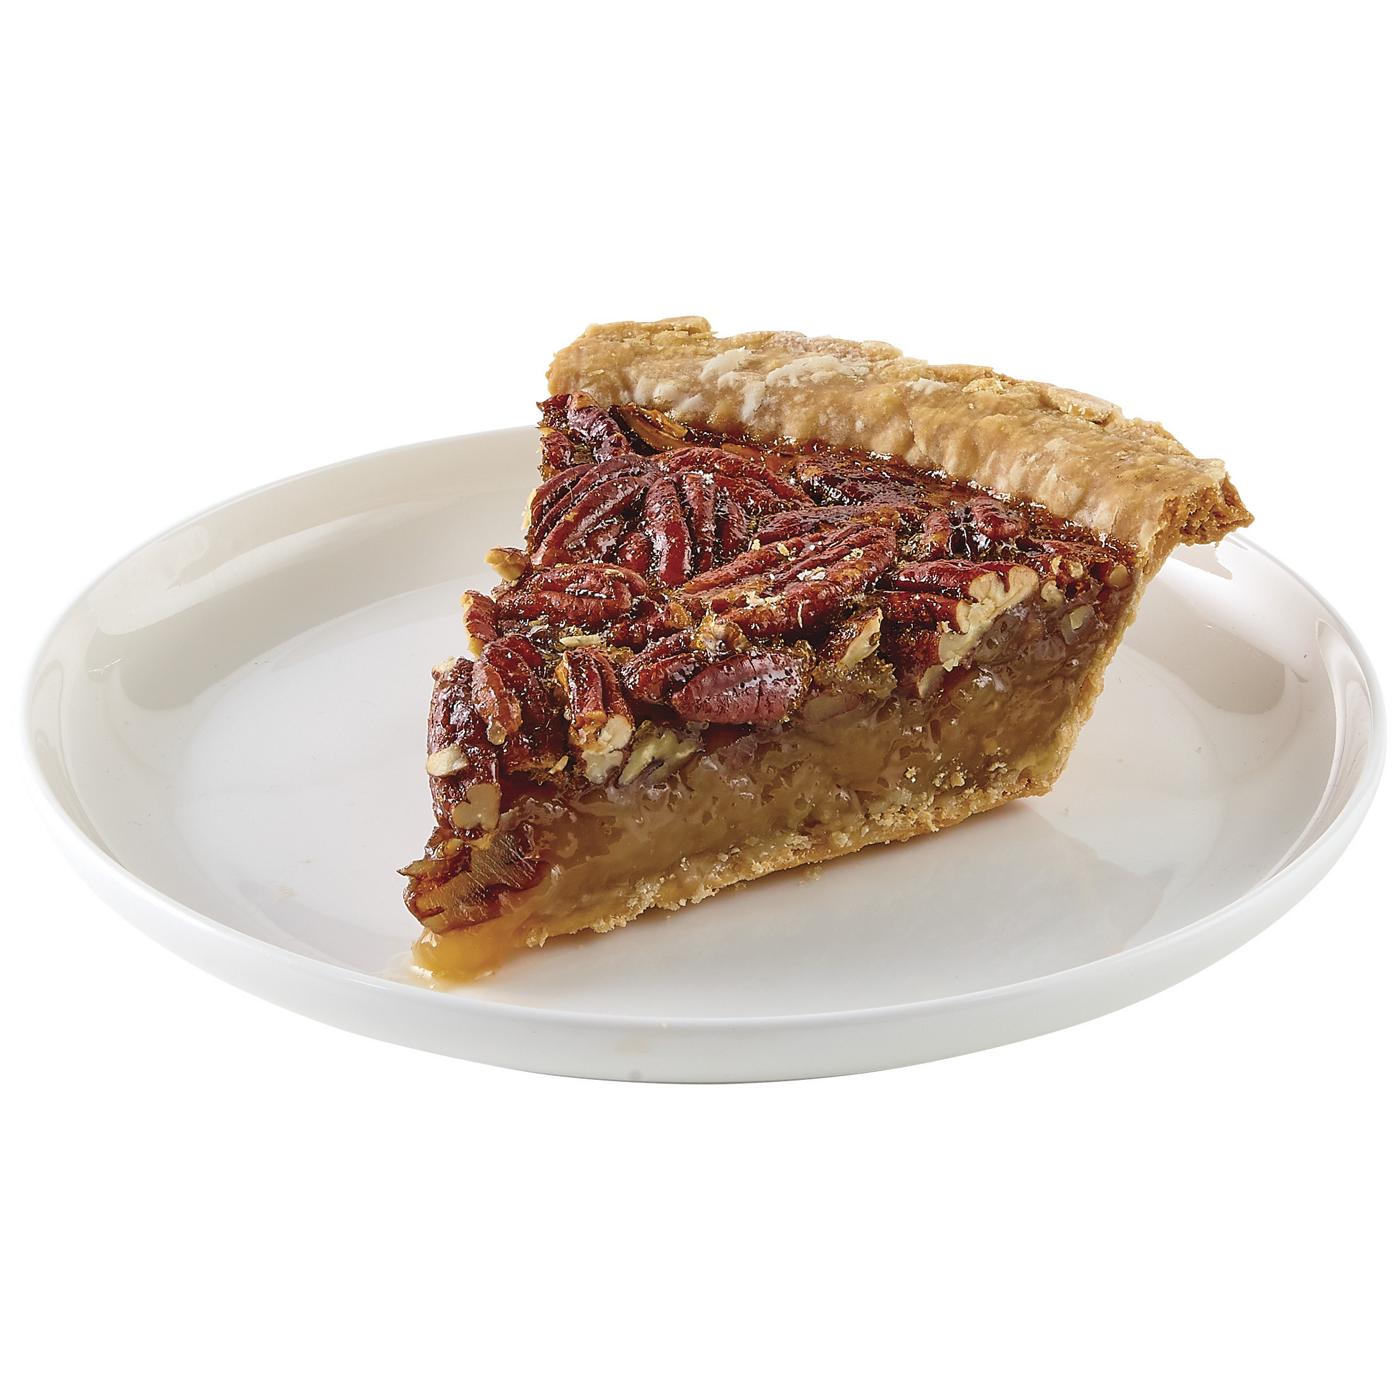 H-E-B Bakery Gourmet Pecan Pie Slice; image 1 of 2